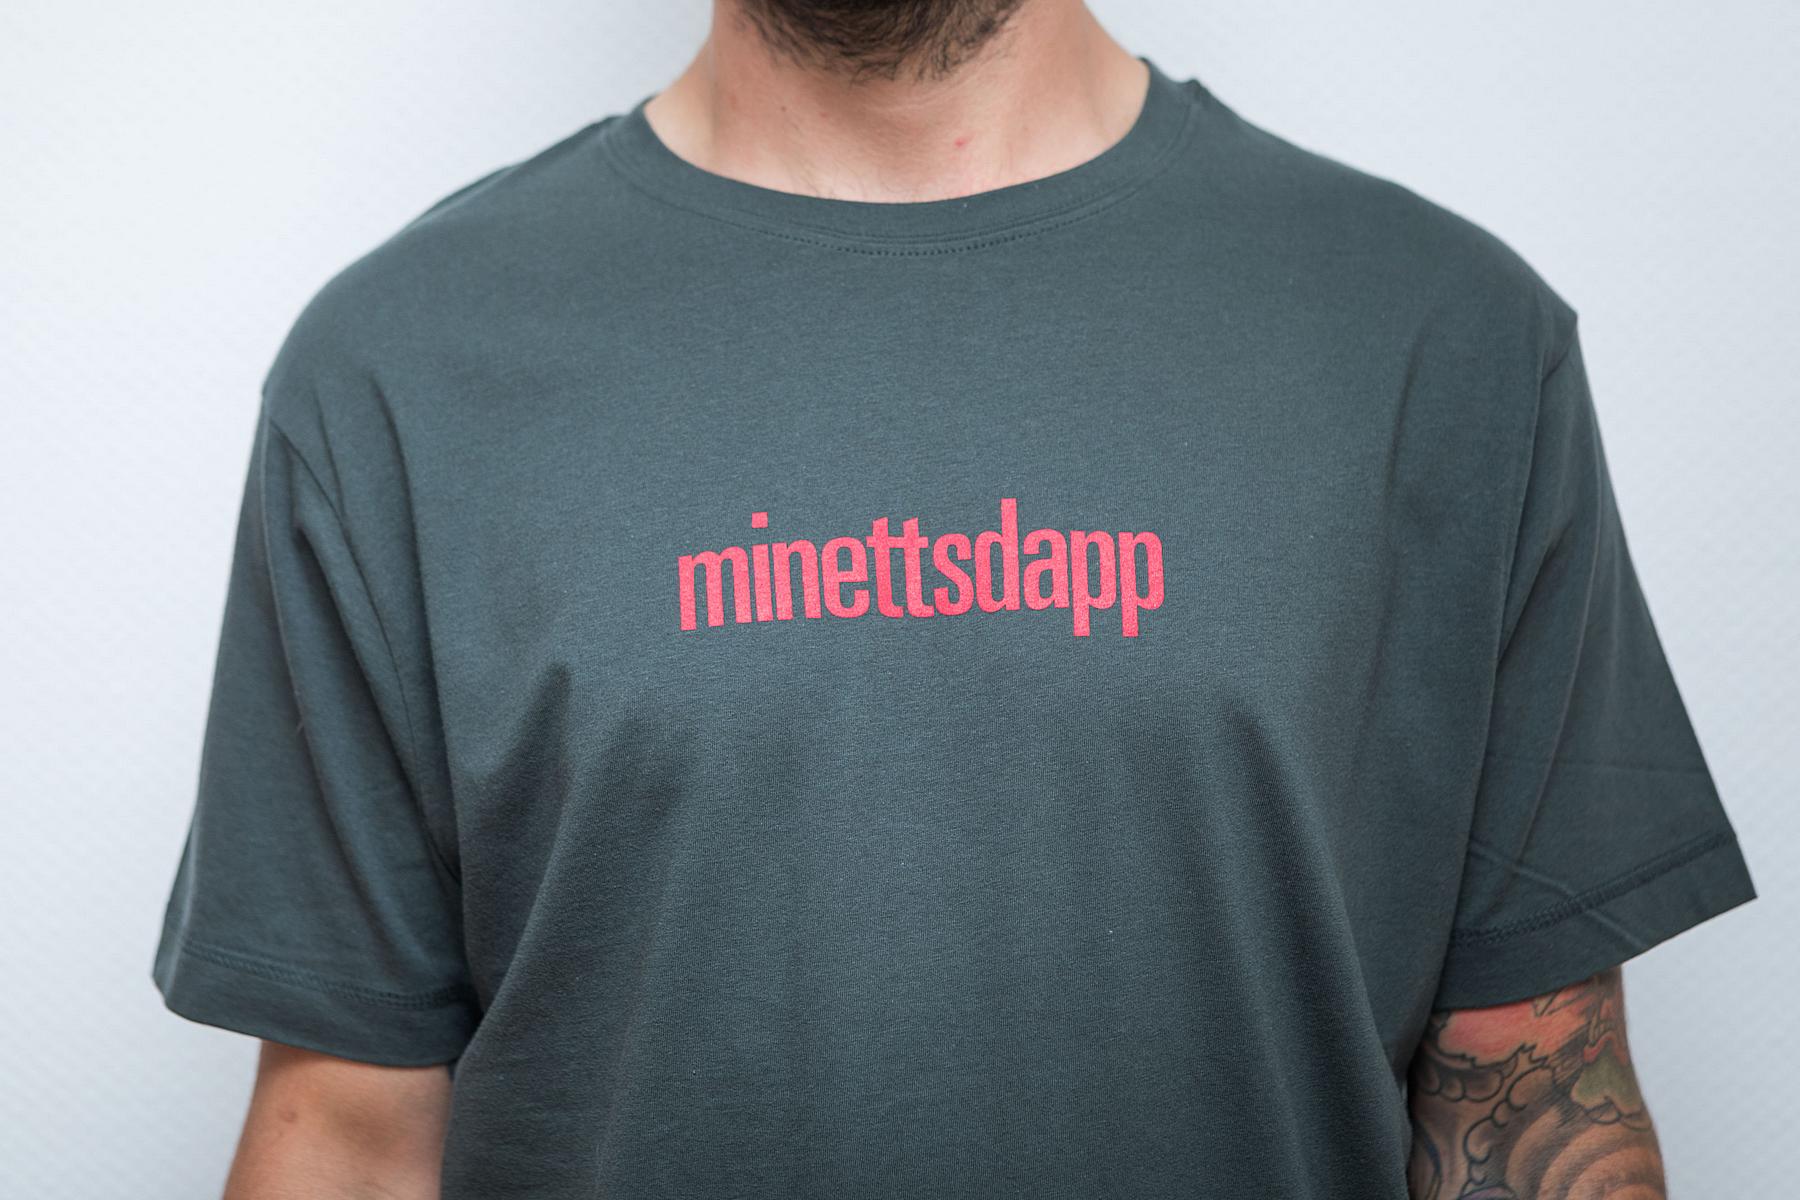 MEN’S T-SHIRT ‘minettsdapp’: Shirt colour „Charcoal Grey“, Print red